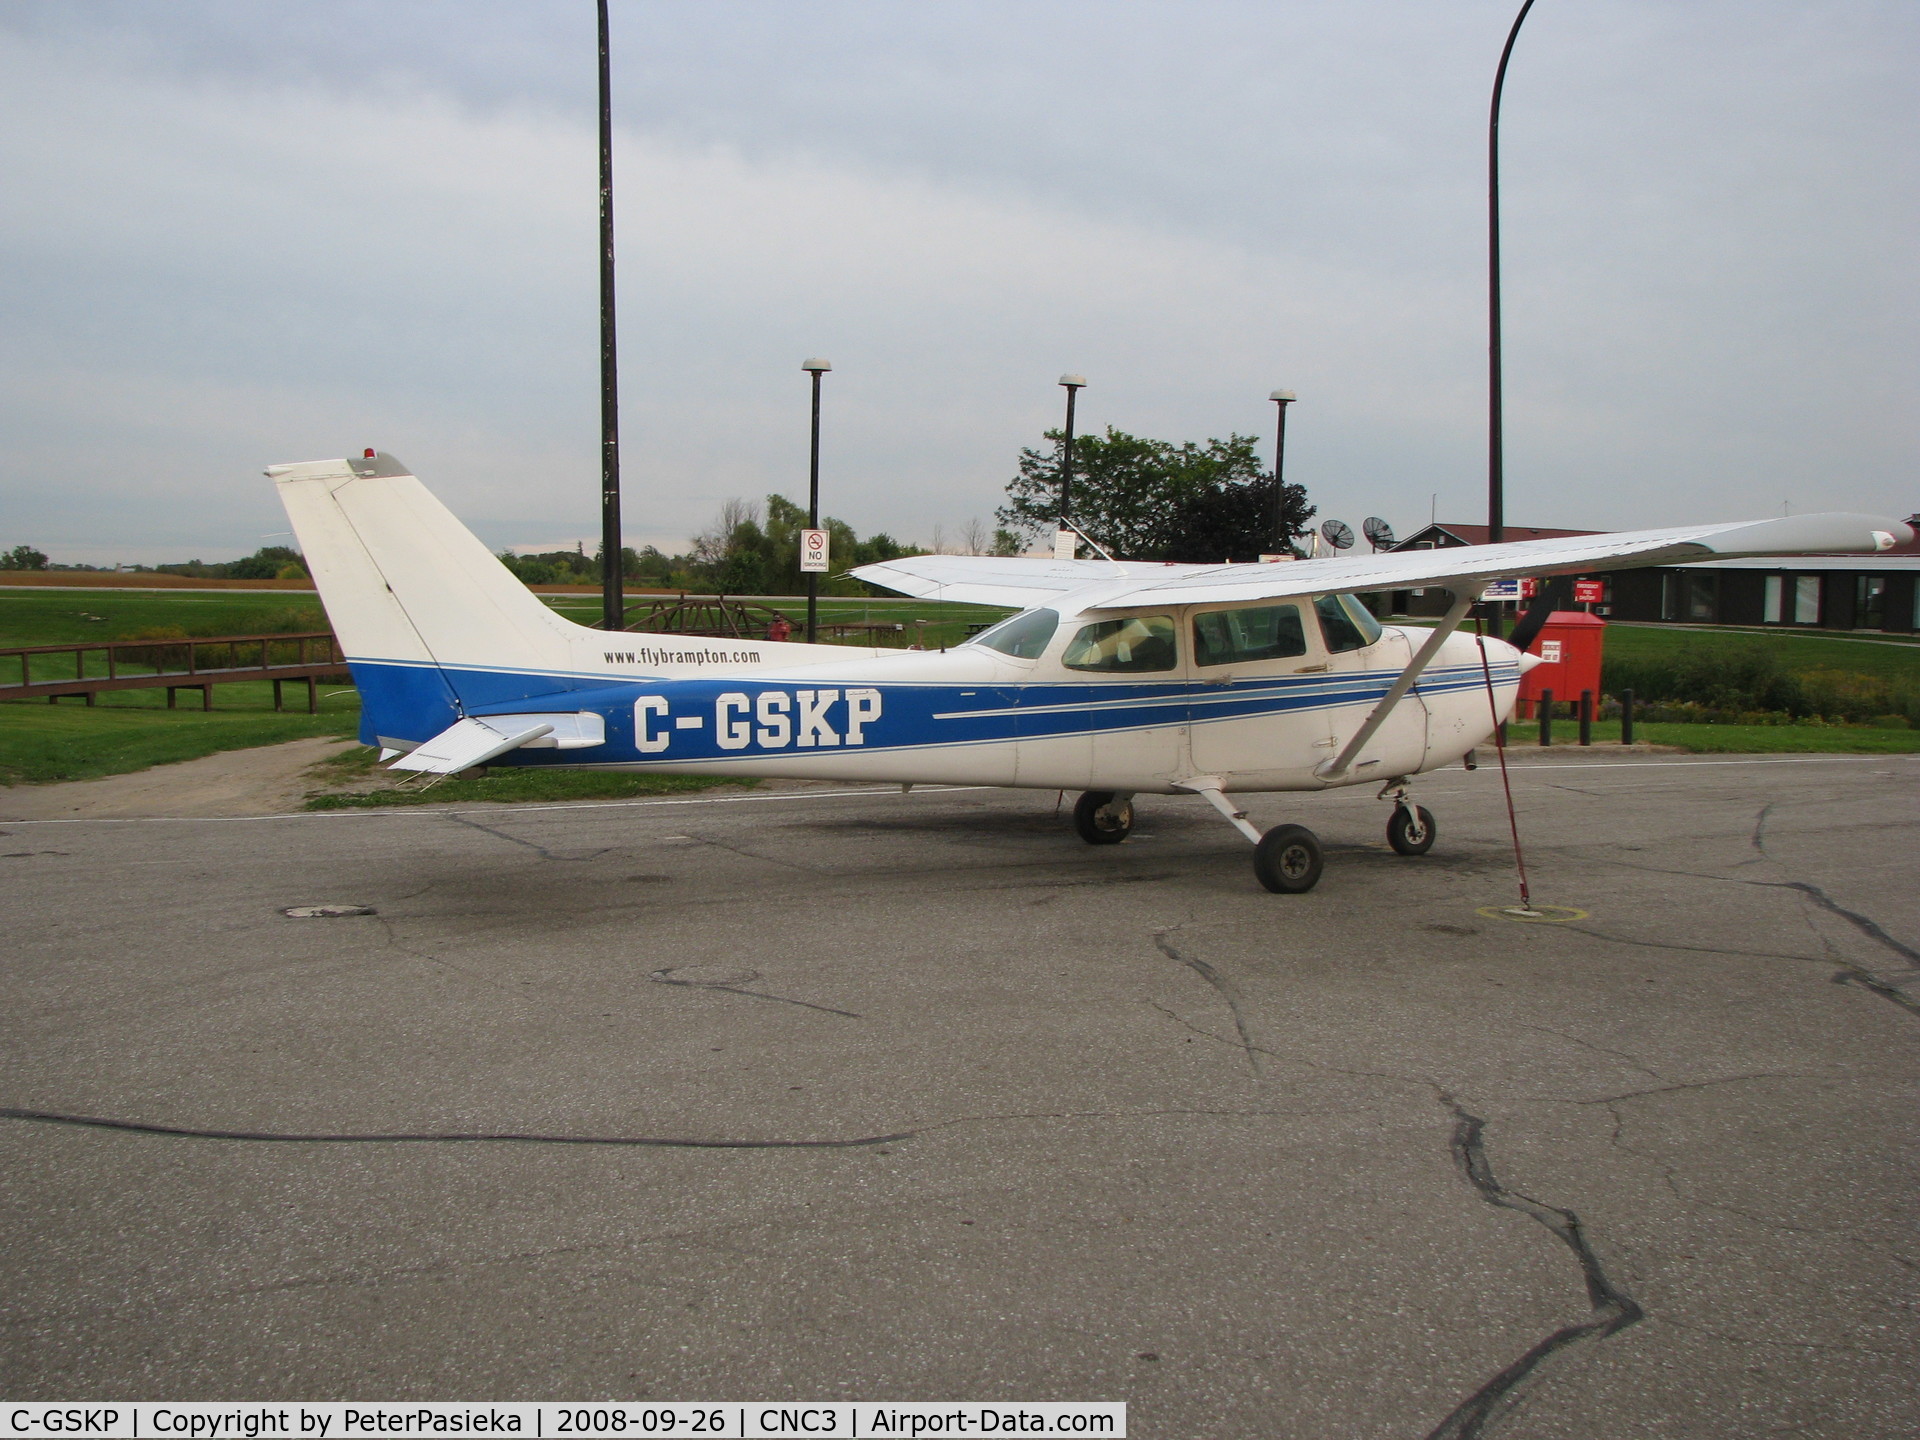 C-GSKP, 1984 Cessna 172P C/N 17276209, @ Brampton Airport, BFC training aircraft